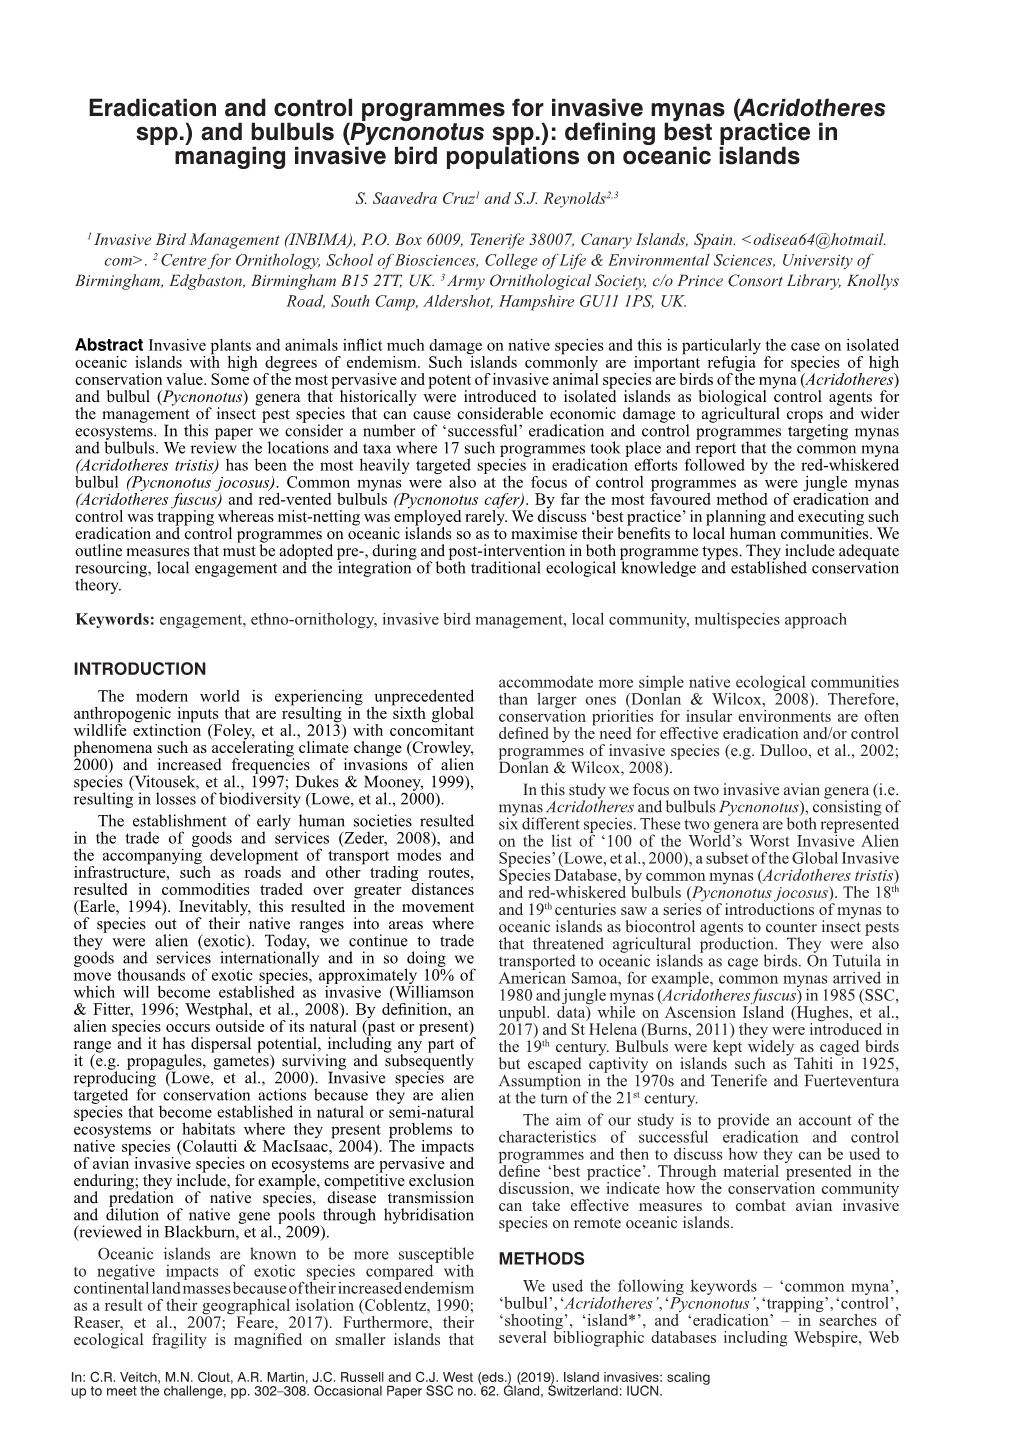 Eradication and Control Programmes for Invasive Mynas (Acridotheres